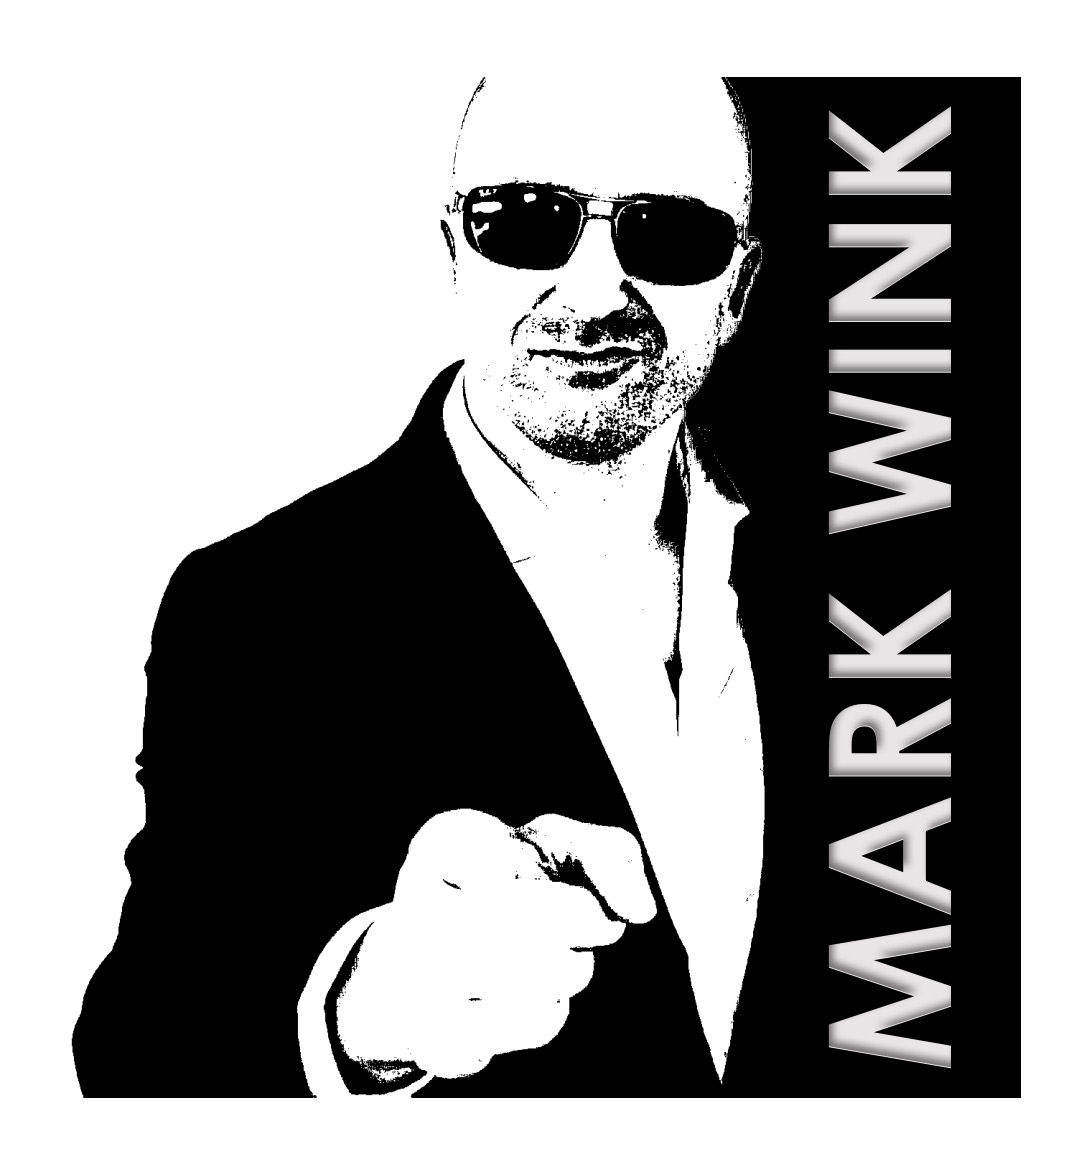 http://indiemusicpeople.com/Uploads/Mark_Wink_-_Mark_Wink_sw.jpg